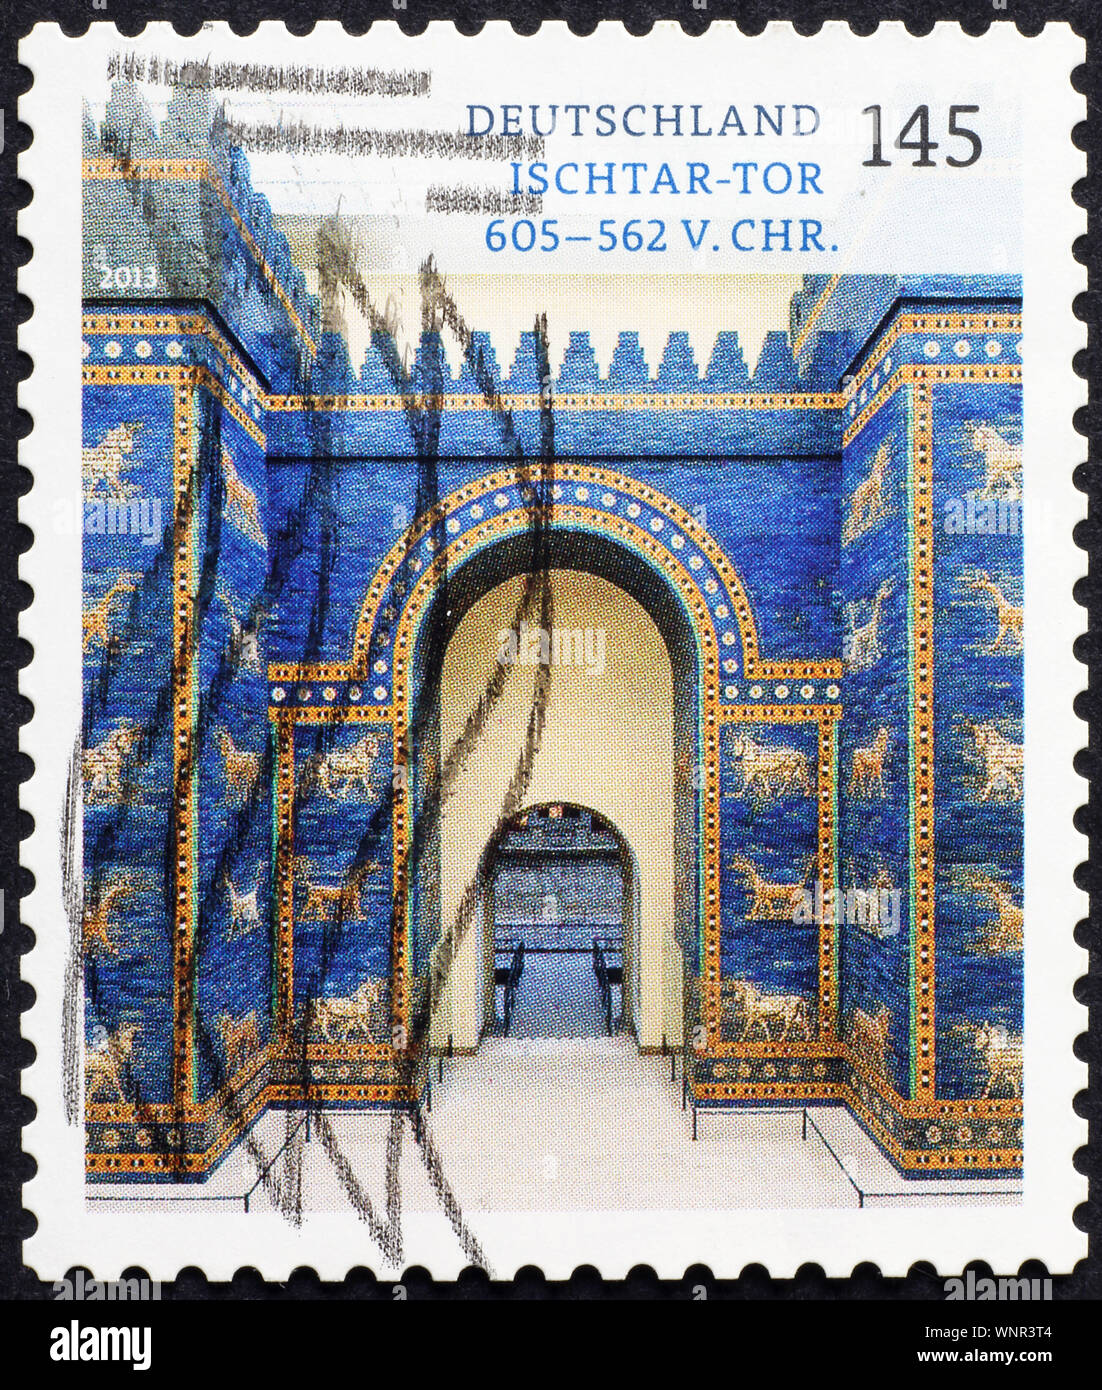 Ishtar Gate of Babylon on german postage stamp Stock Photo